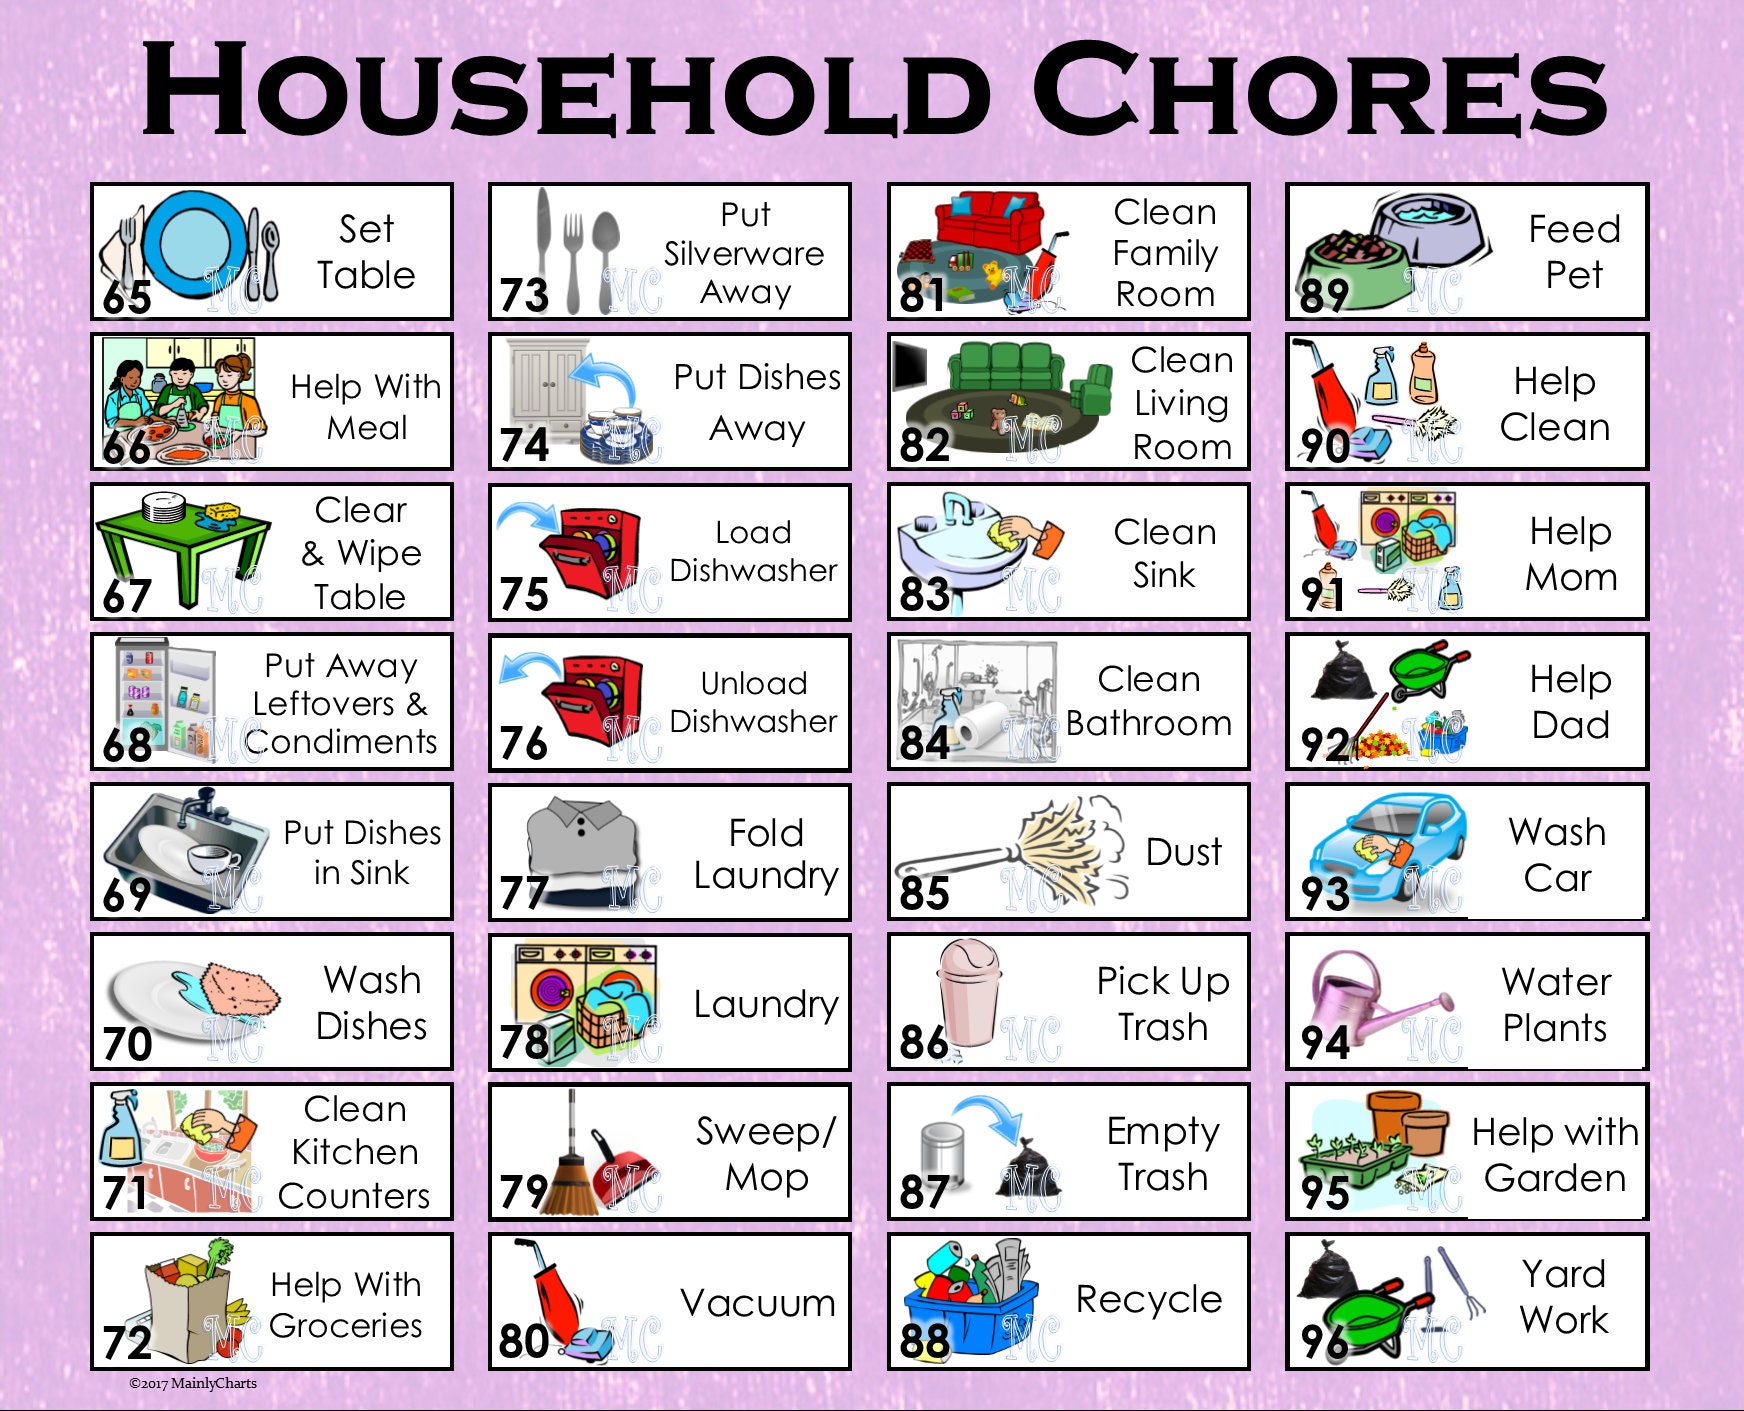 Chore Chart Mini with Chore Bucks for Tweens Teens, Kids Chores - Chor –  Steele Wizard Creation